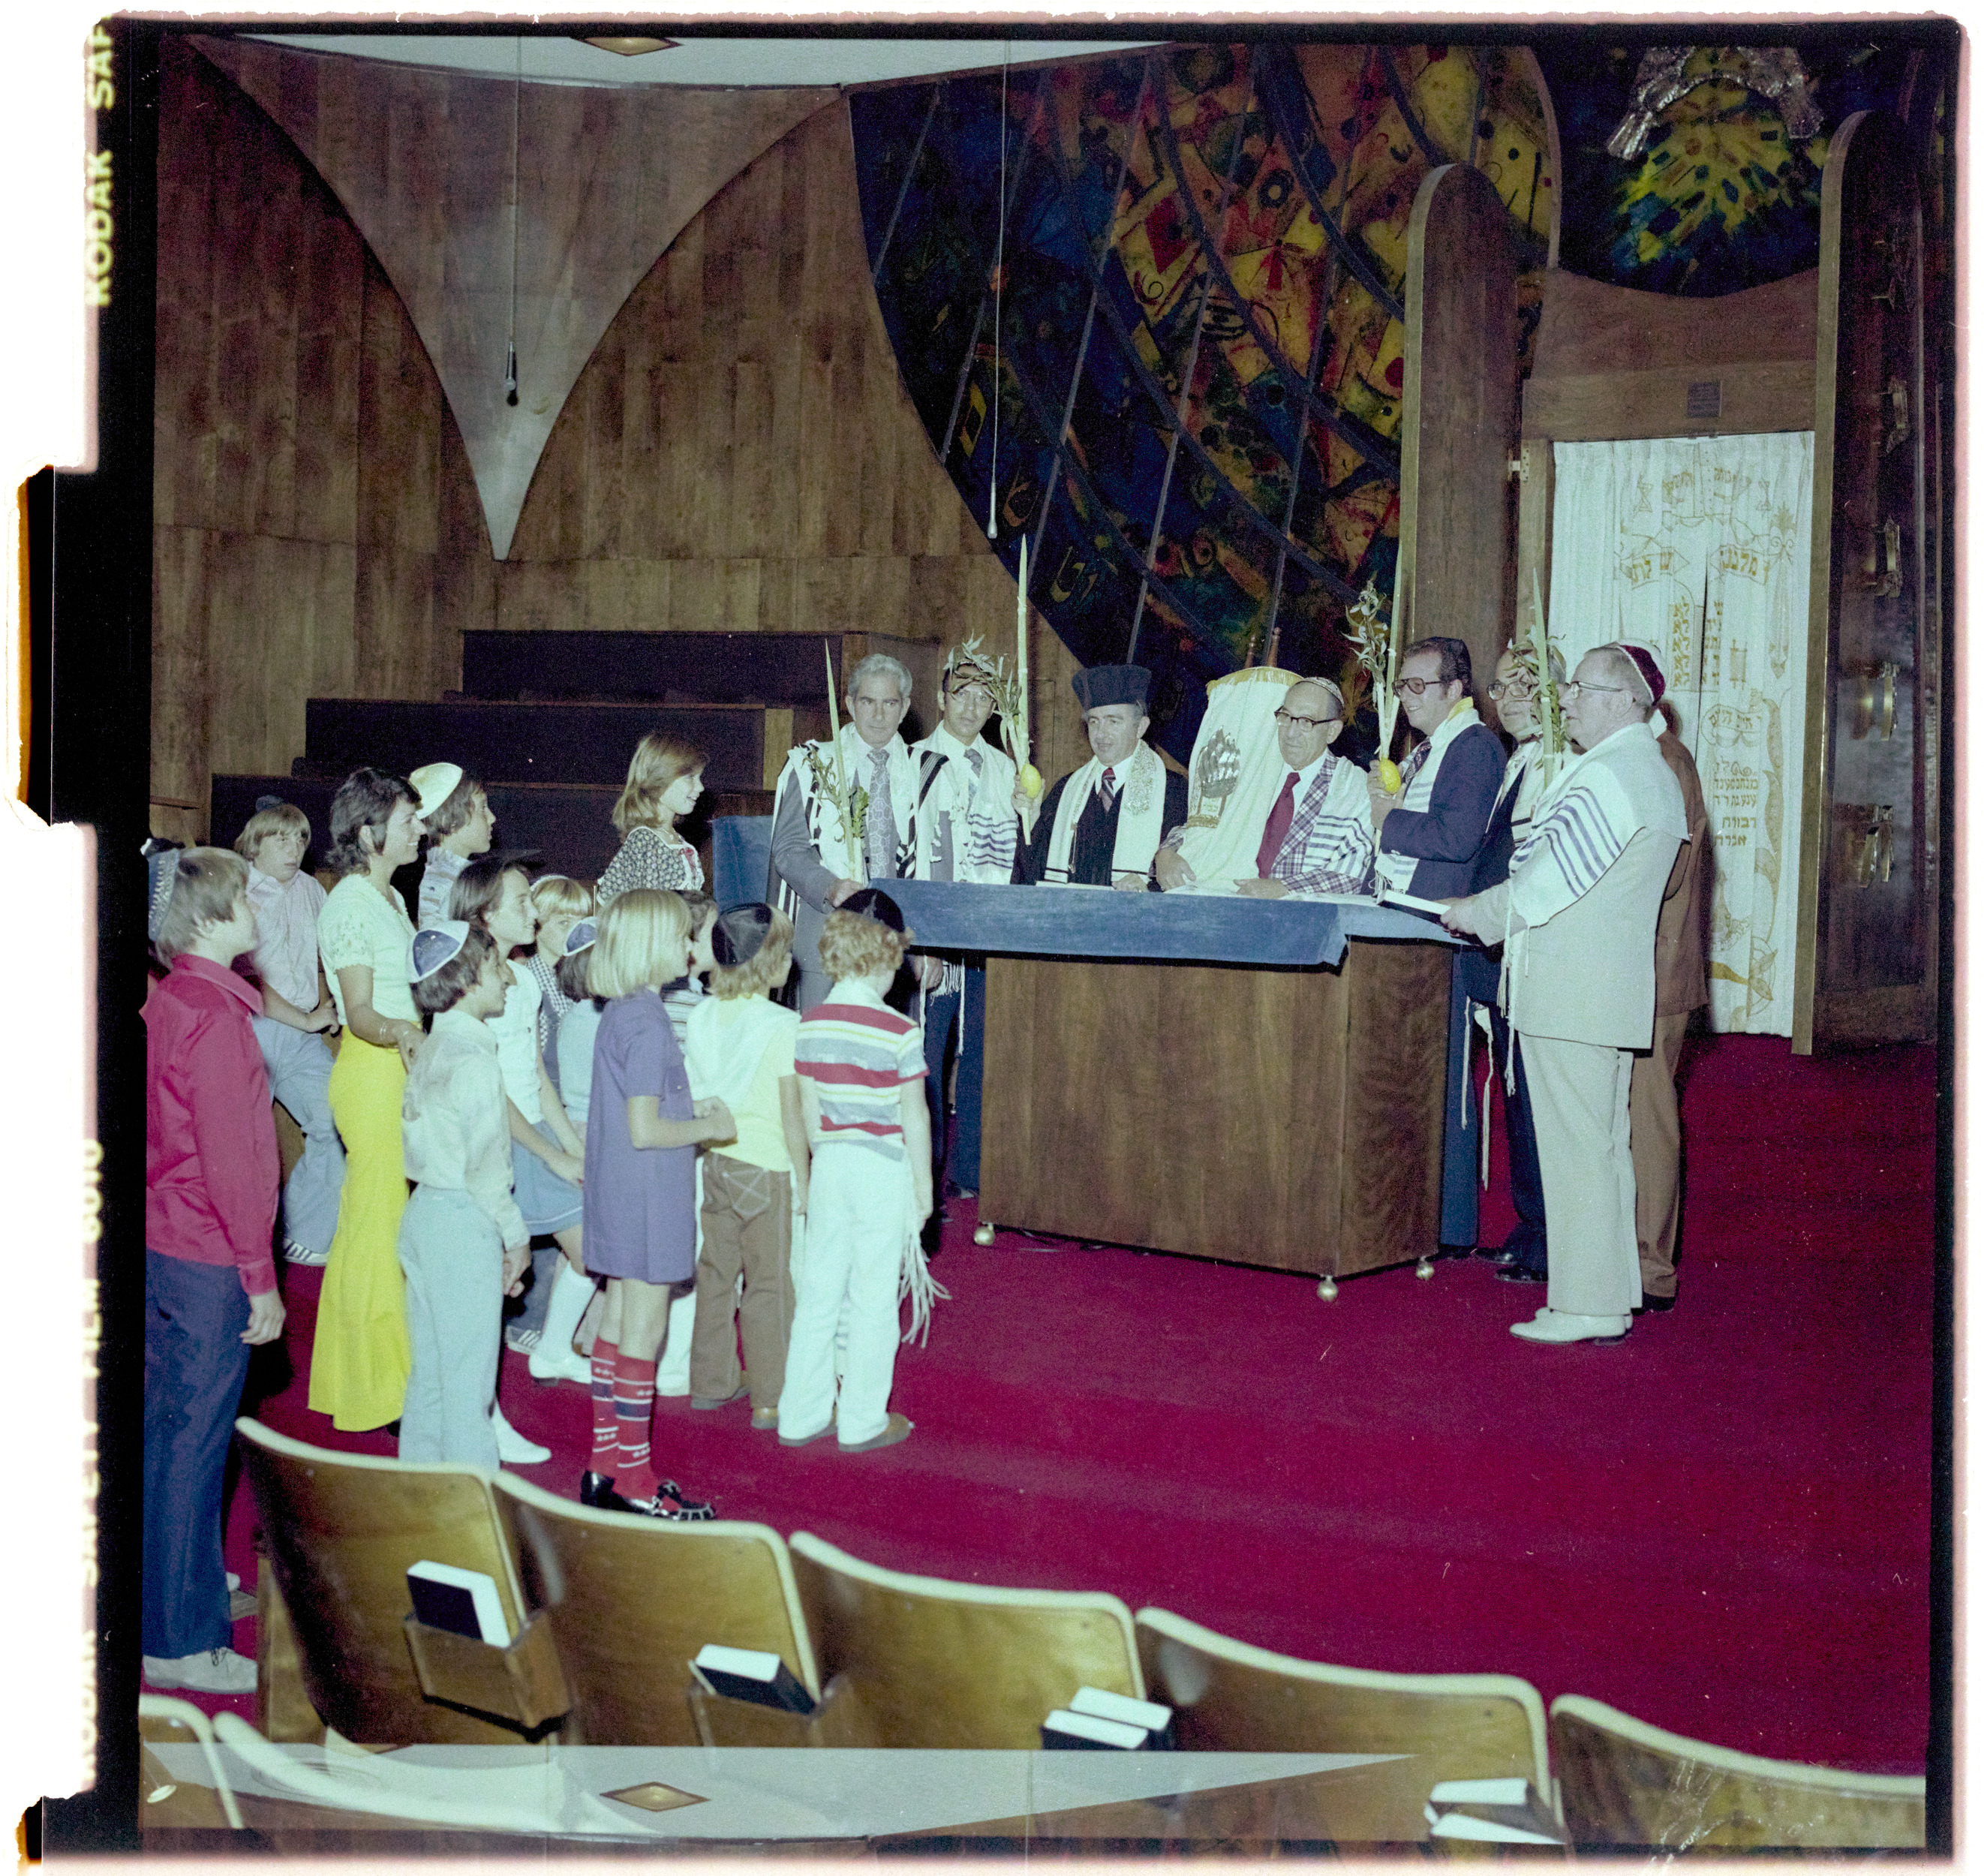 Photographs of Temple Beth Sholom Worship Service, image 04